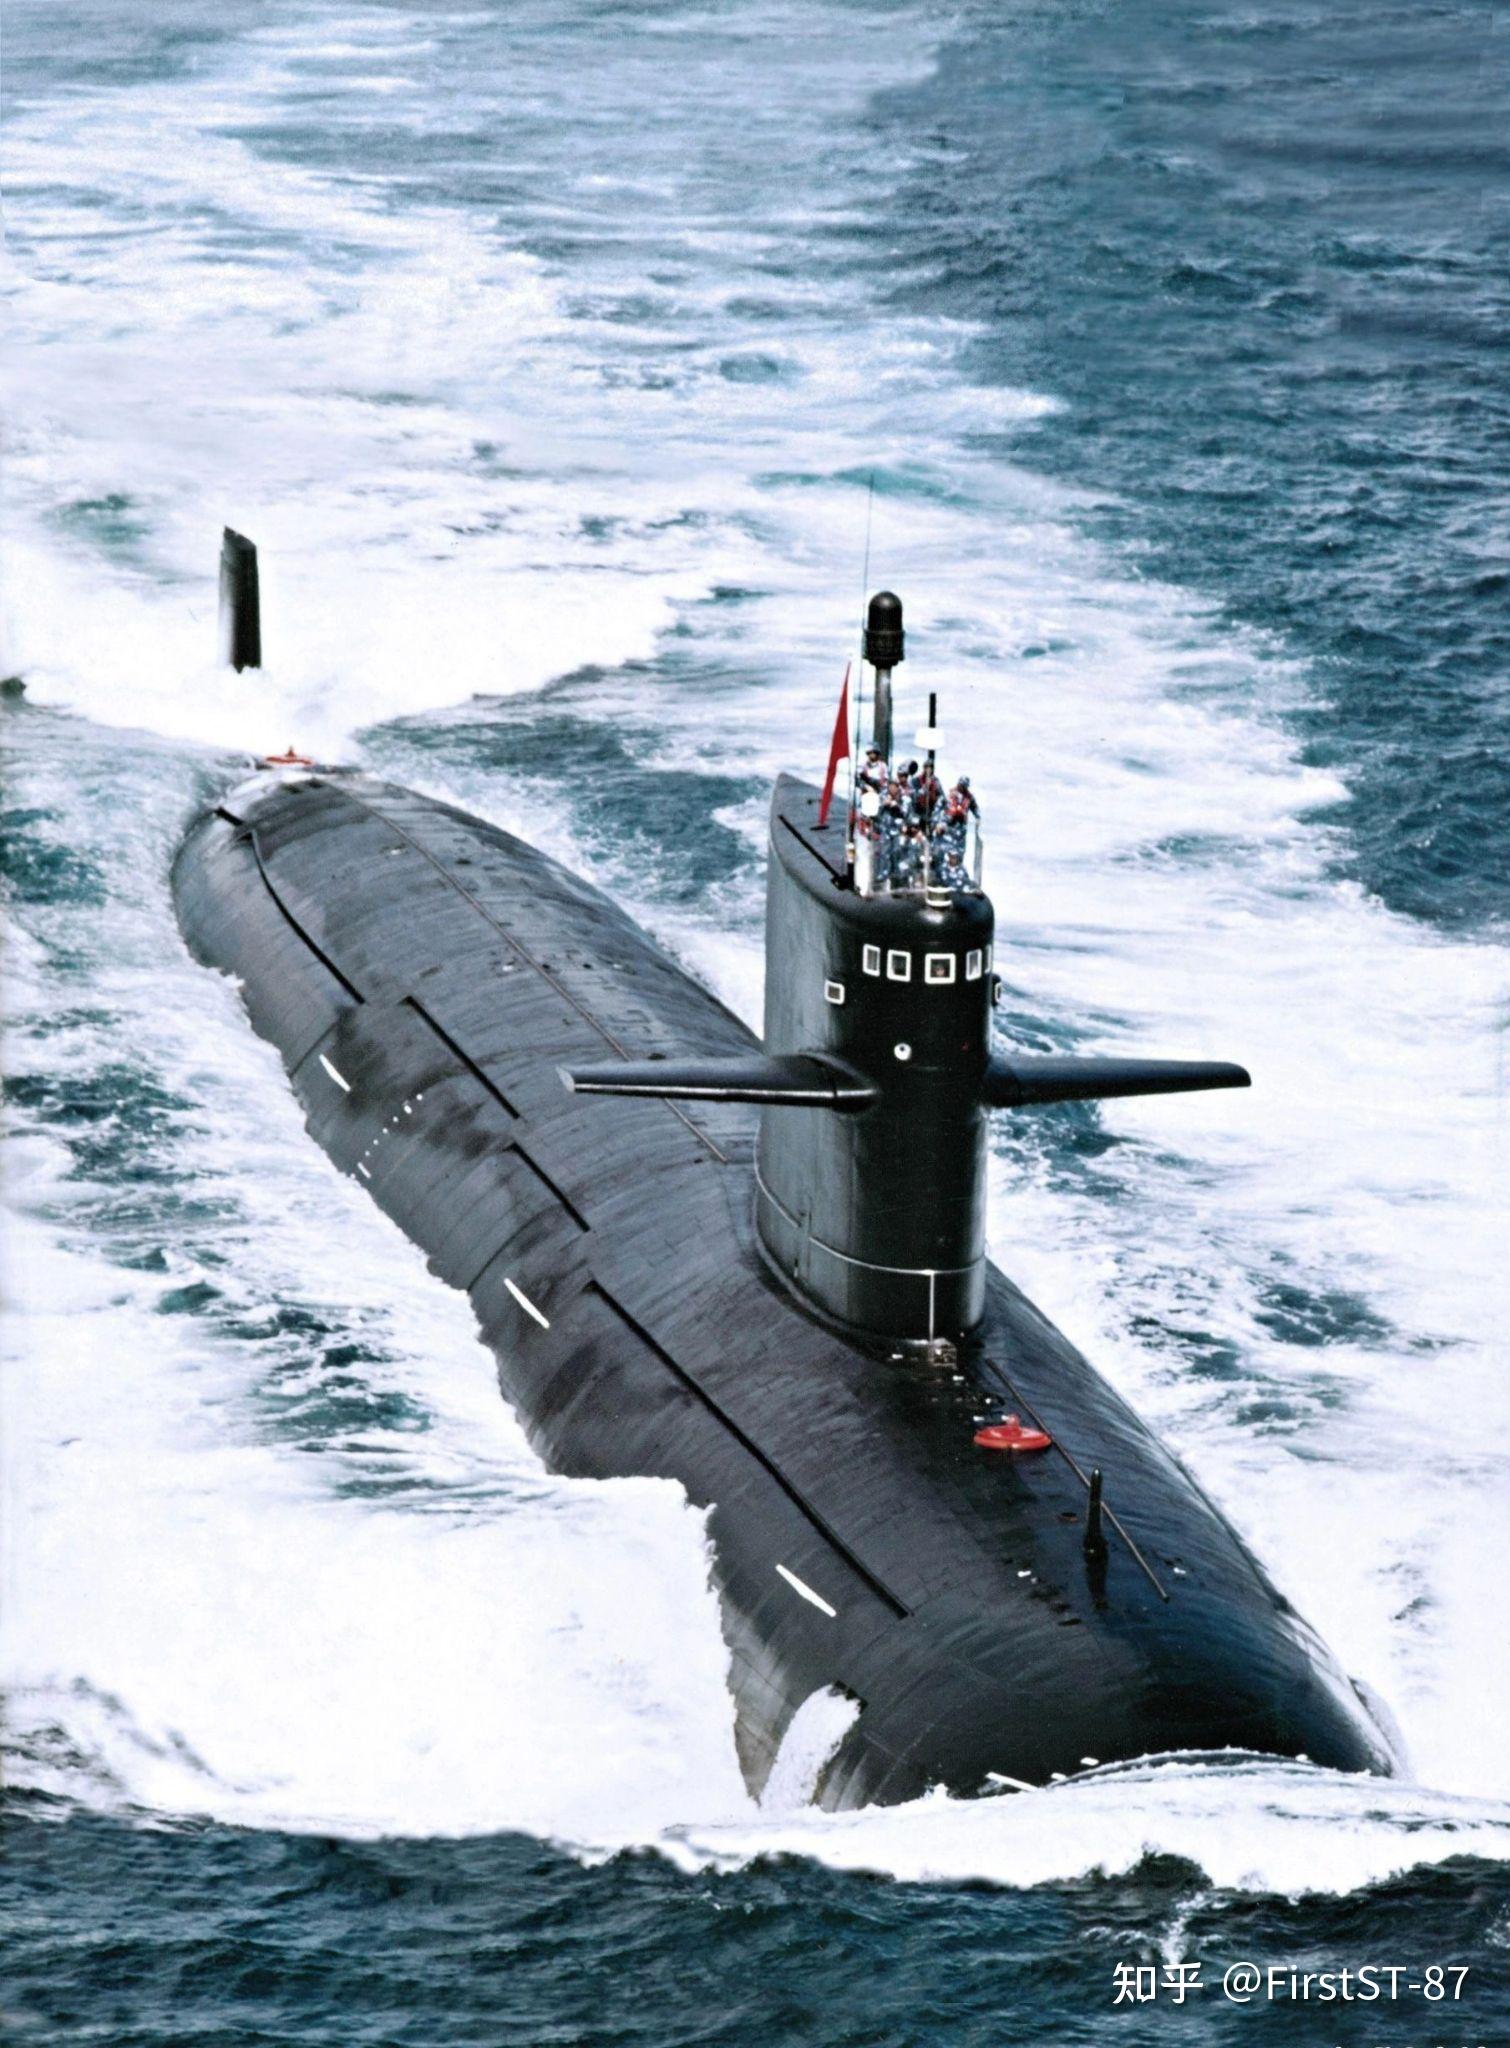 jin-class,译文:晋级,是中国海军隶下的一型核动力弹道导弹潜艇